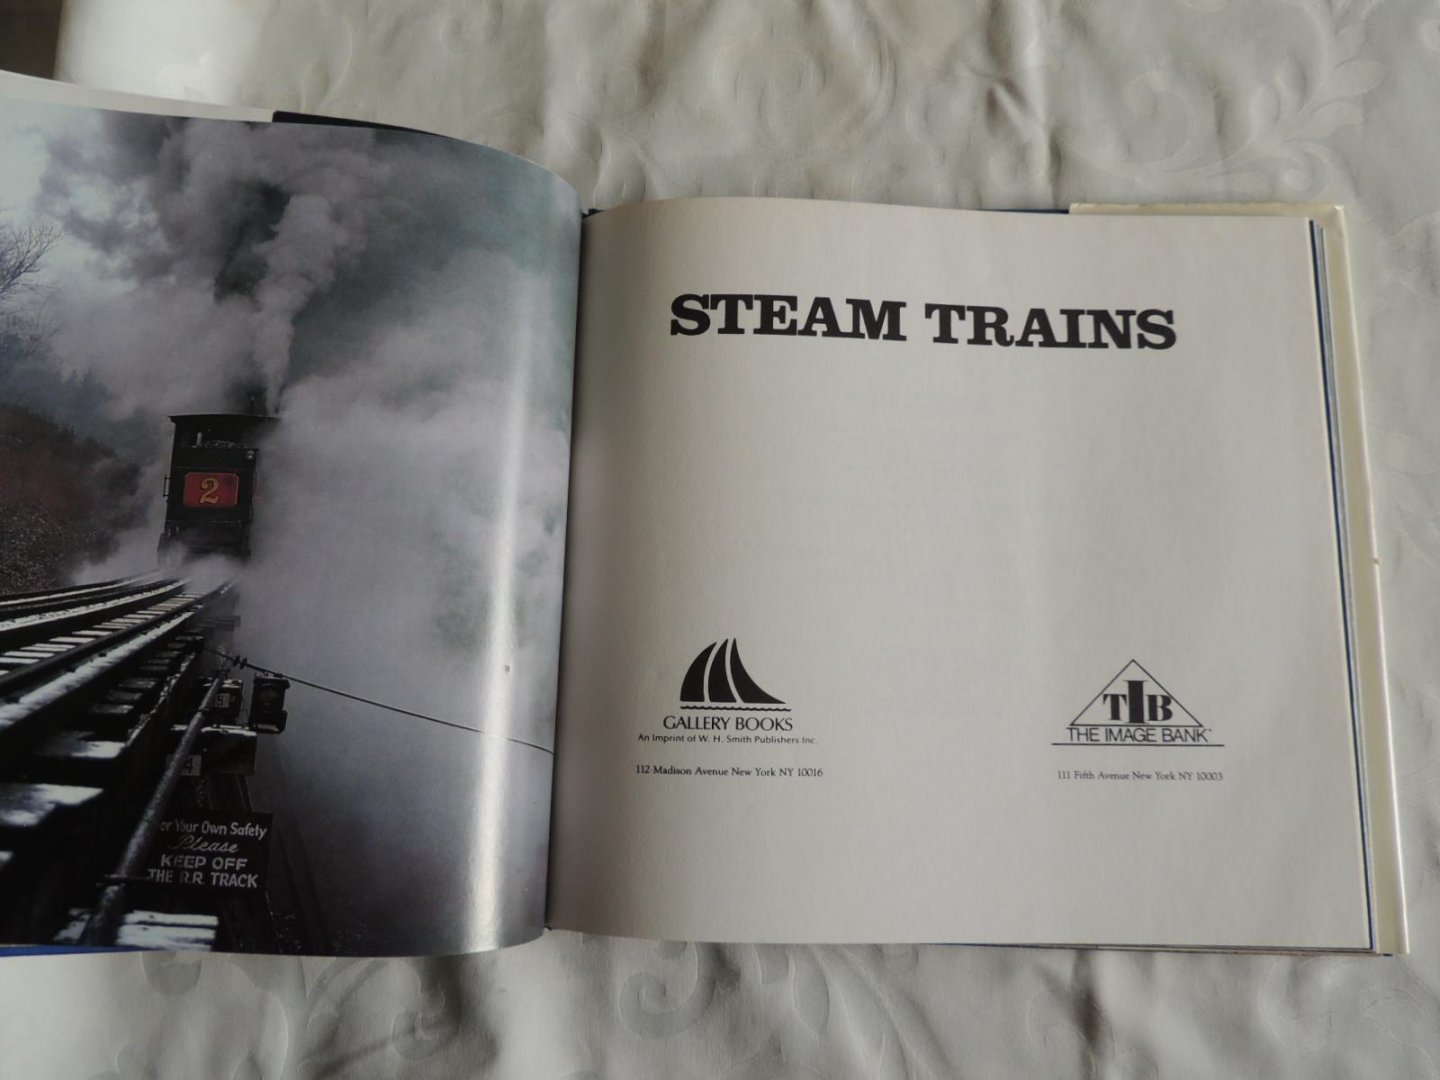 Wickre John M. - Steam trains